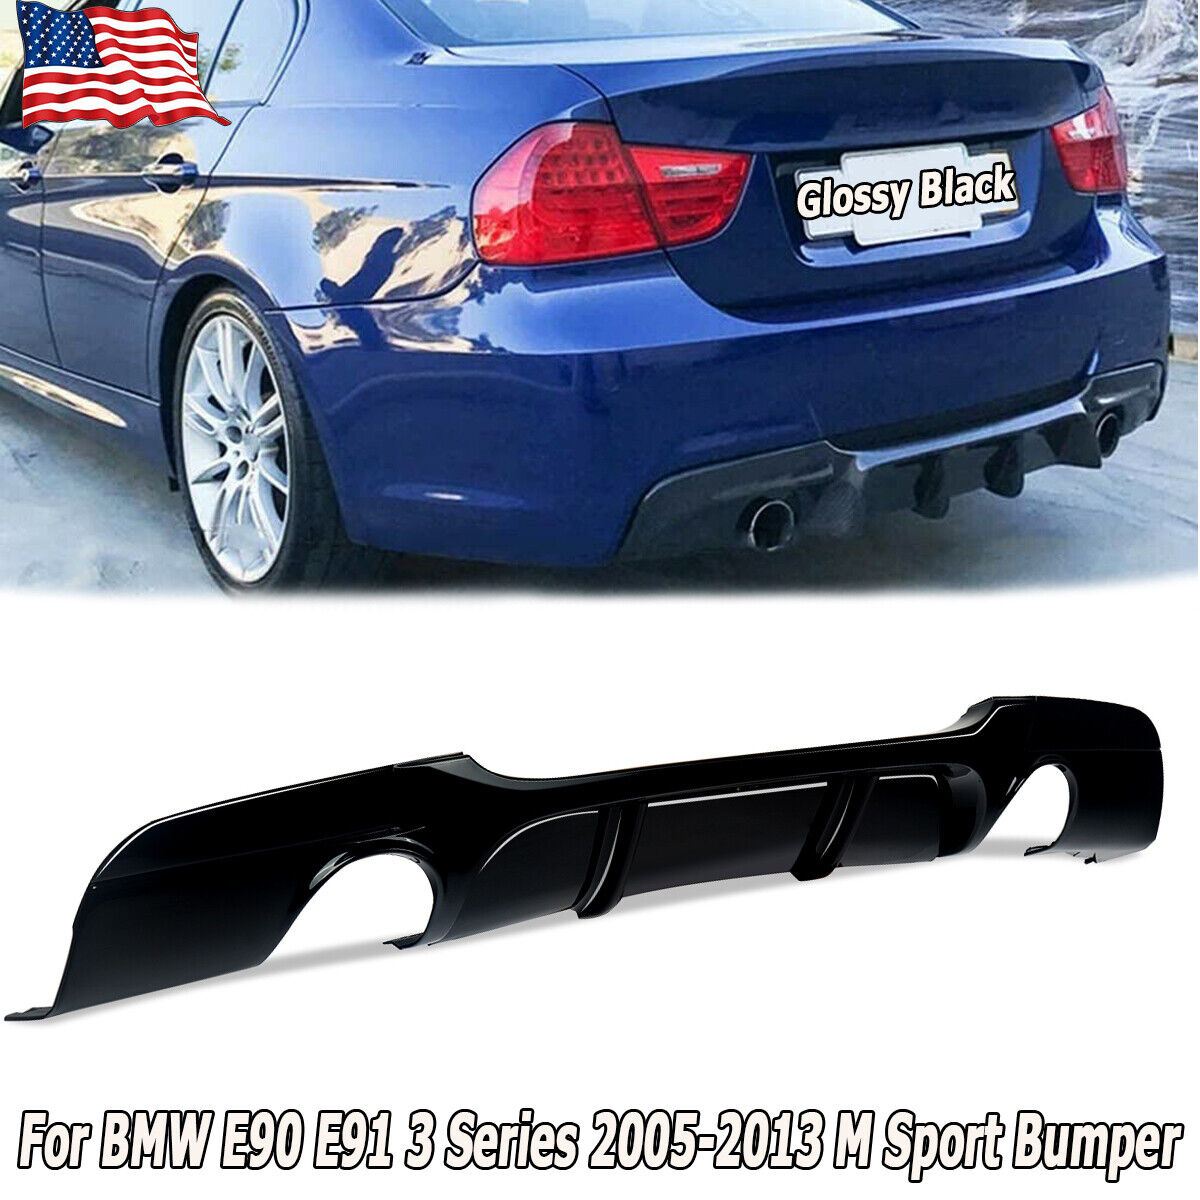 FOR BMW E90 E91 335i M TECH 2005-2012 SHINEY BLACK SPORT REAR DIFFUSER VALANCE